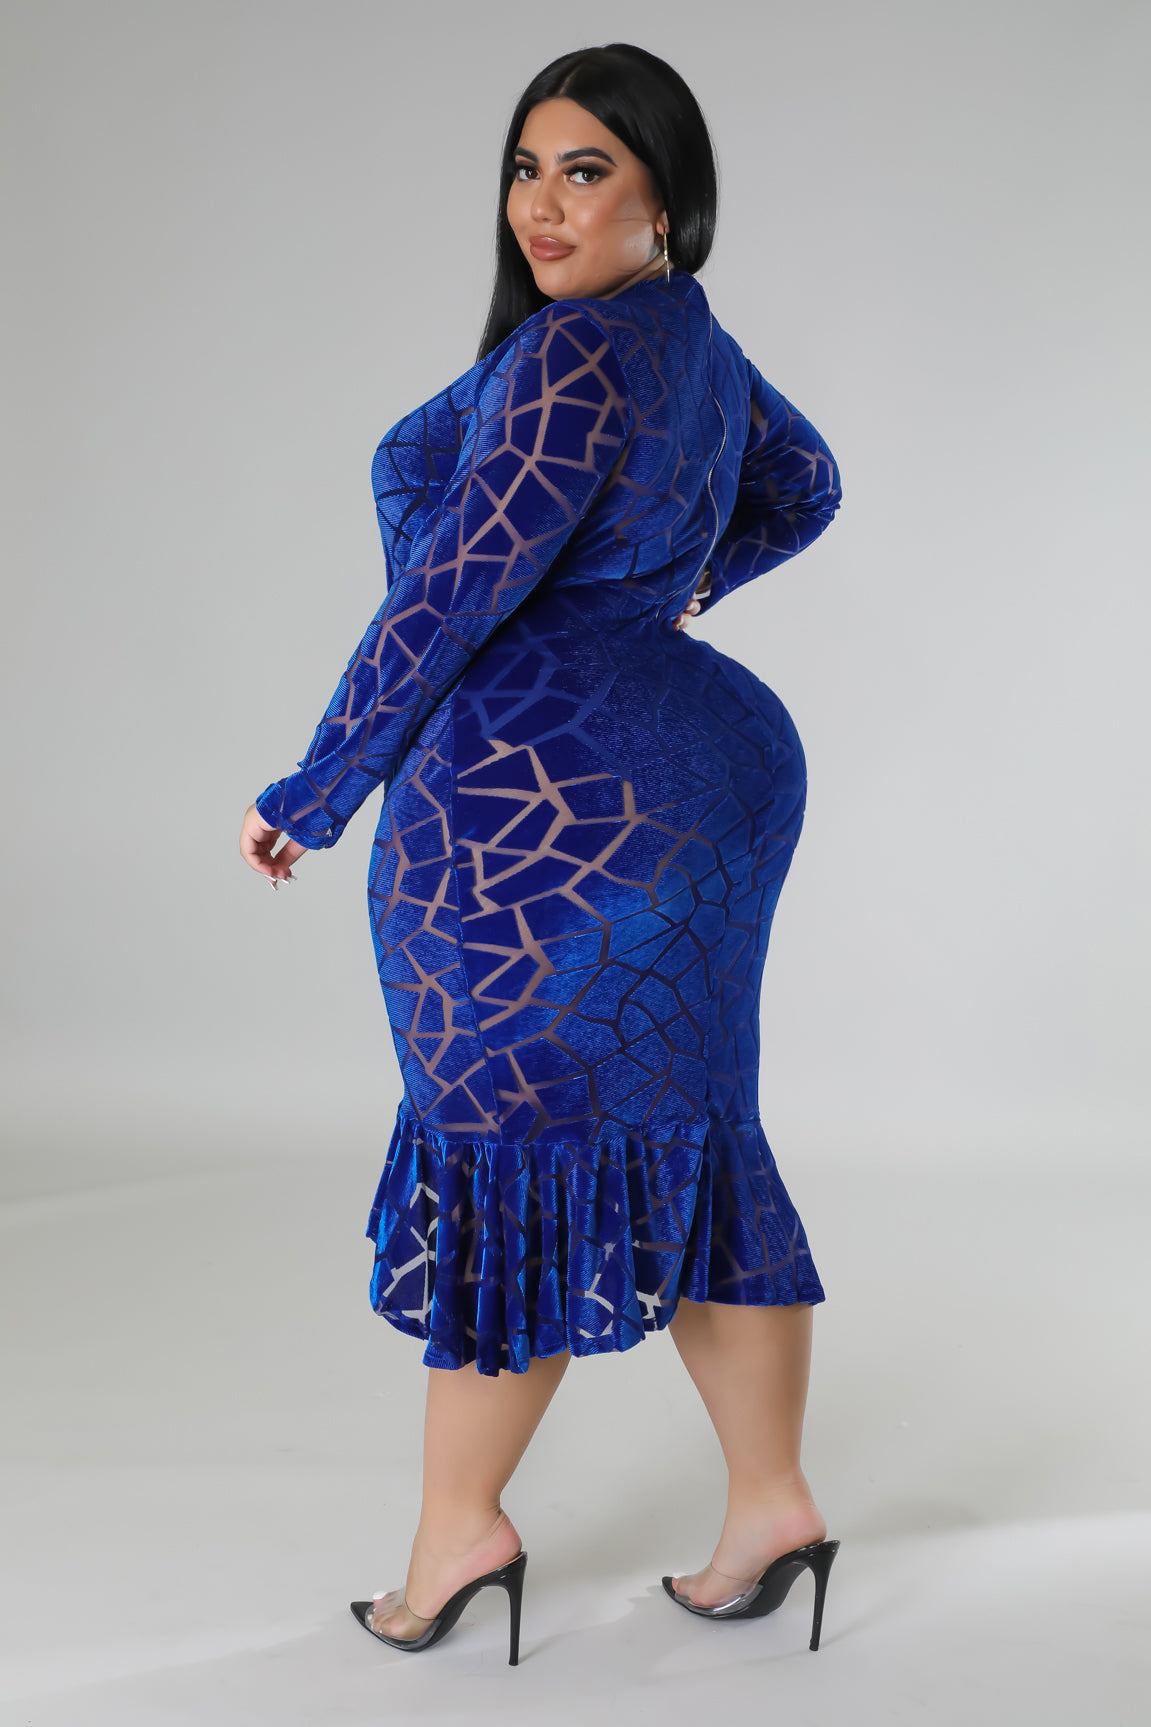 Fsqjgq Funeral Dress Female A-Line Ladies Plus Size Long Sleeve Loose  Casual V Neck Belt Print Elastic Waist Length A Line Dress Blue Size XL